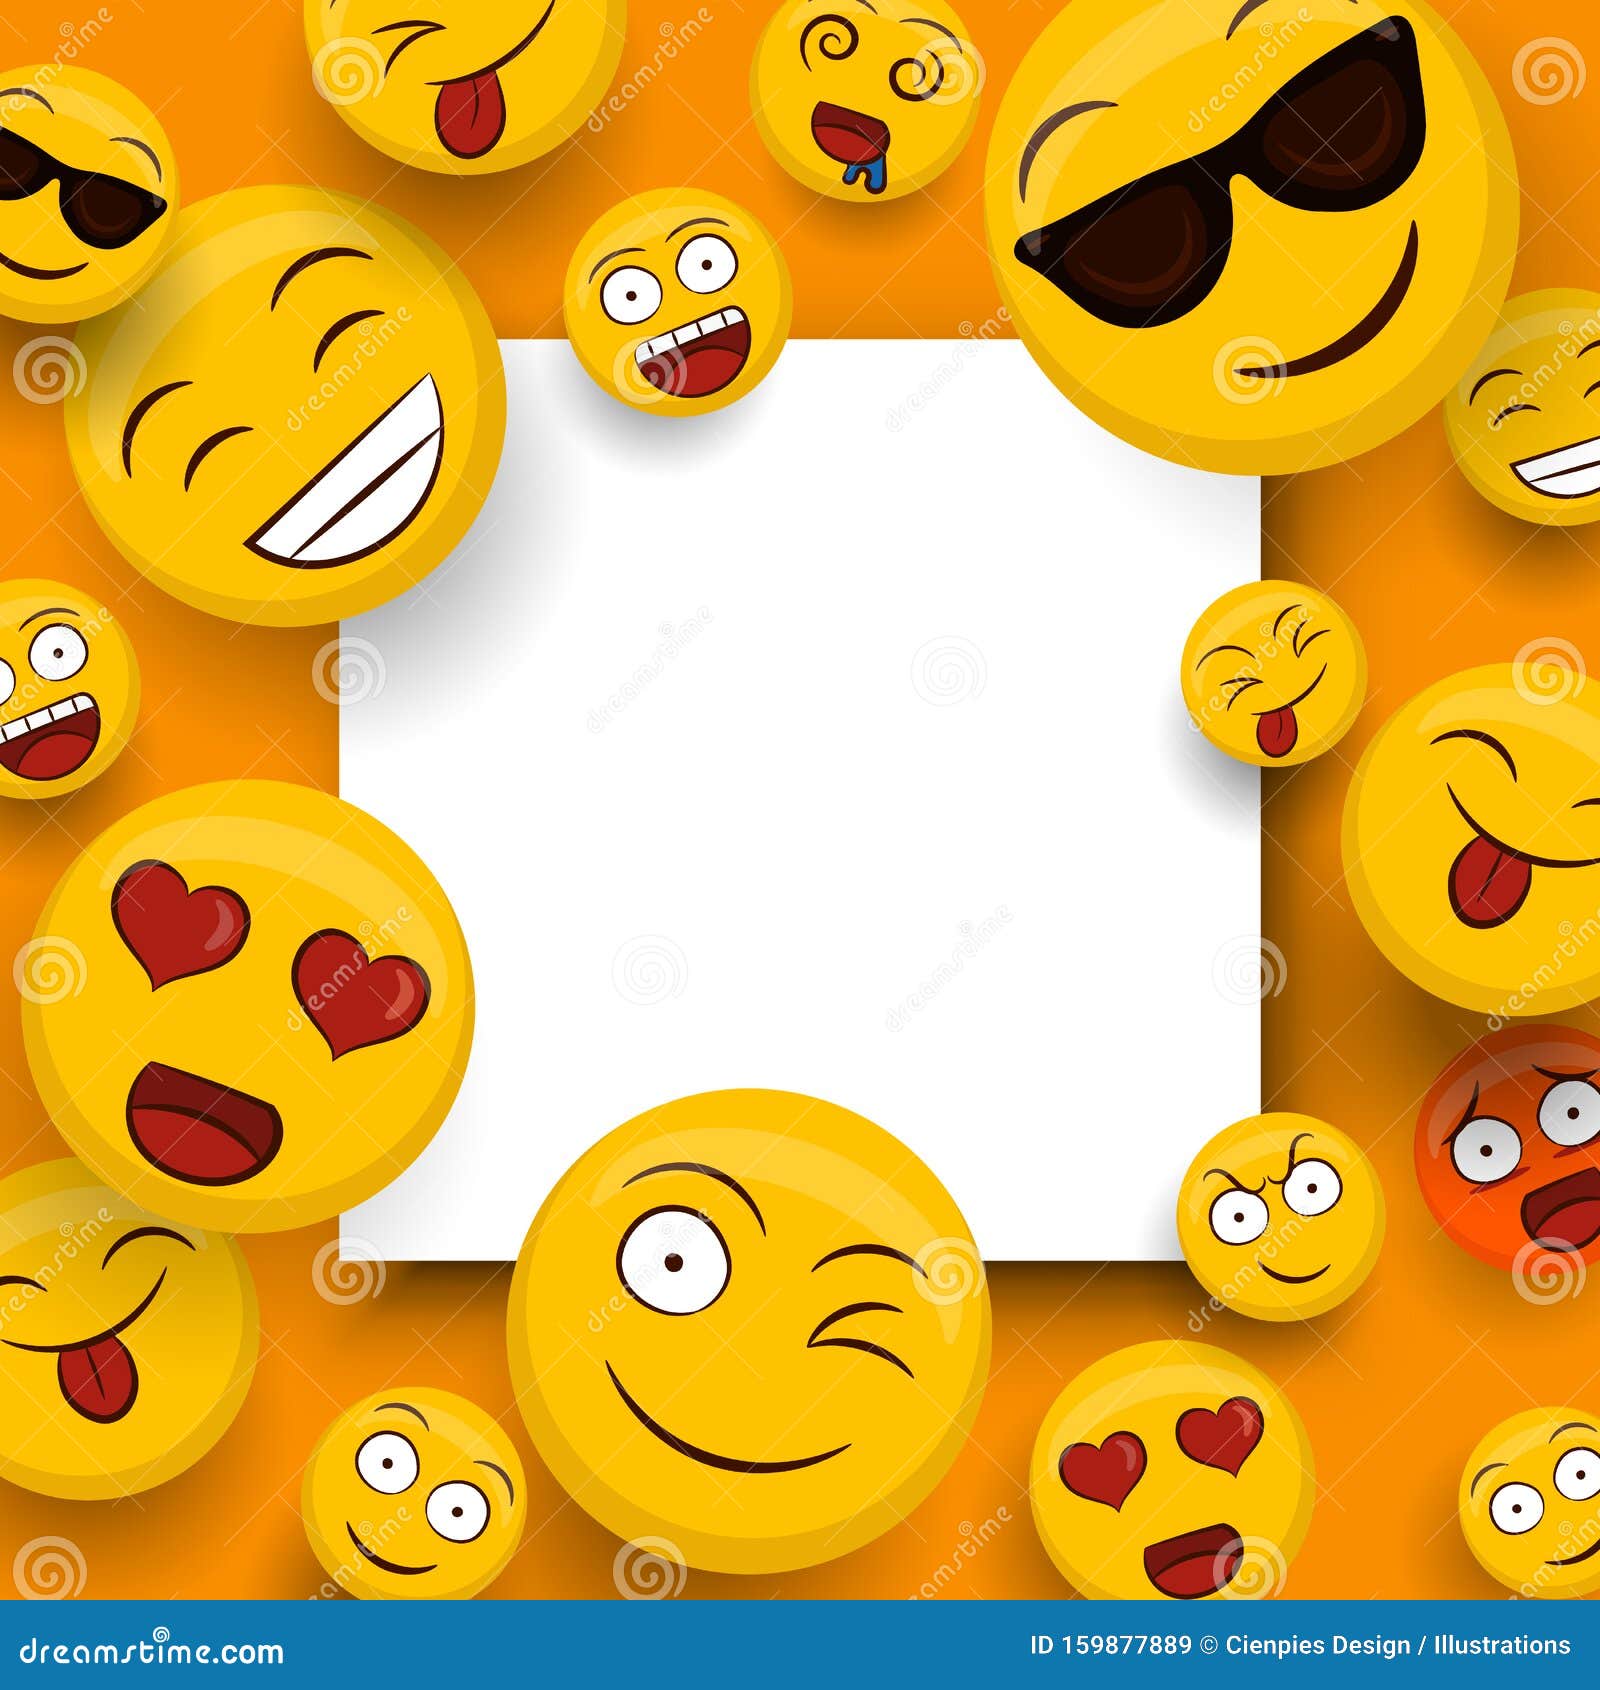 Fun Smiley Face Cartoon Icons White Frame Template Stock Illustration -  Illustration of emoji, surprise: 159877889